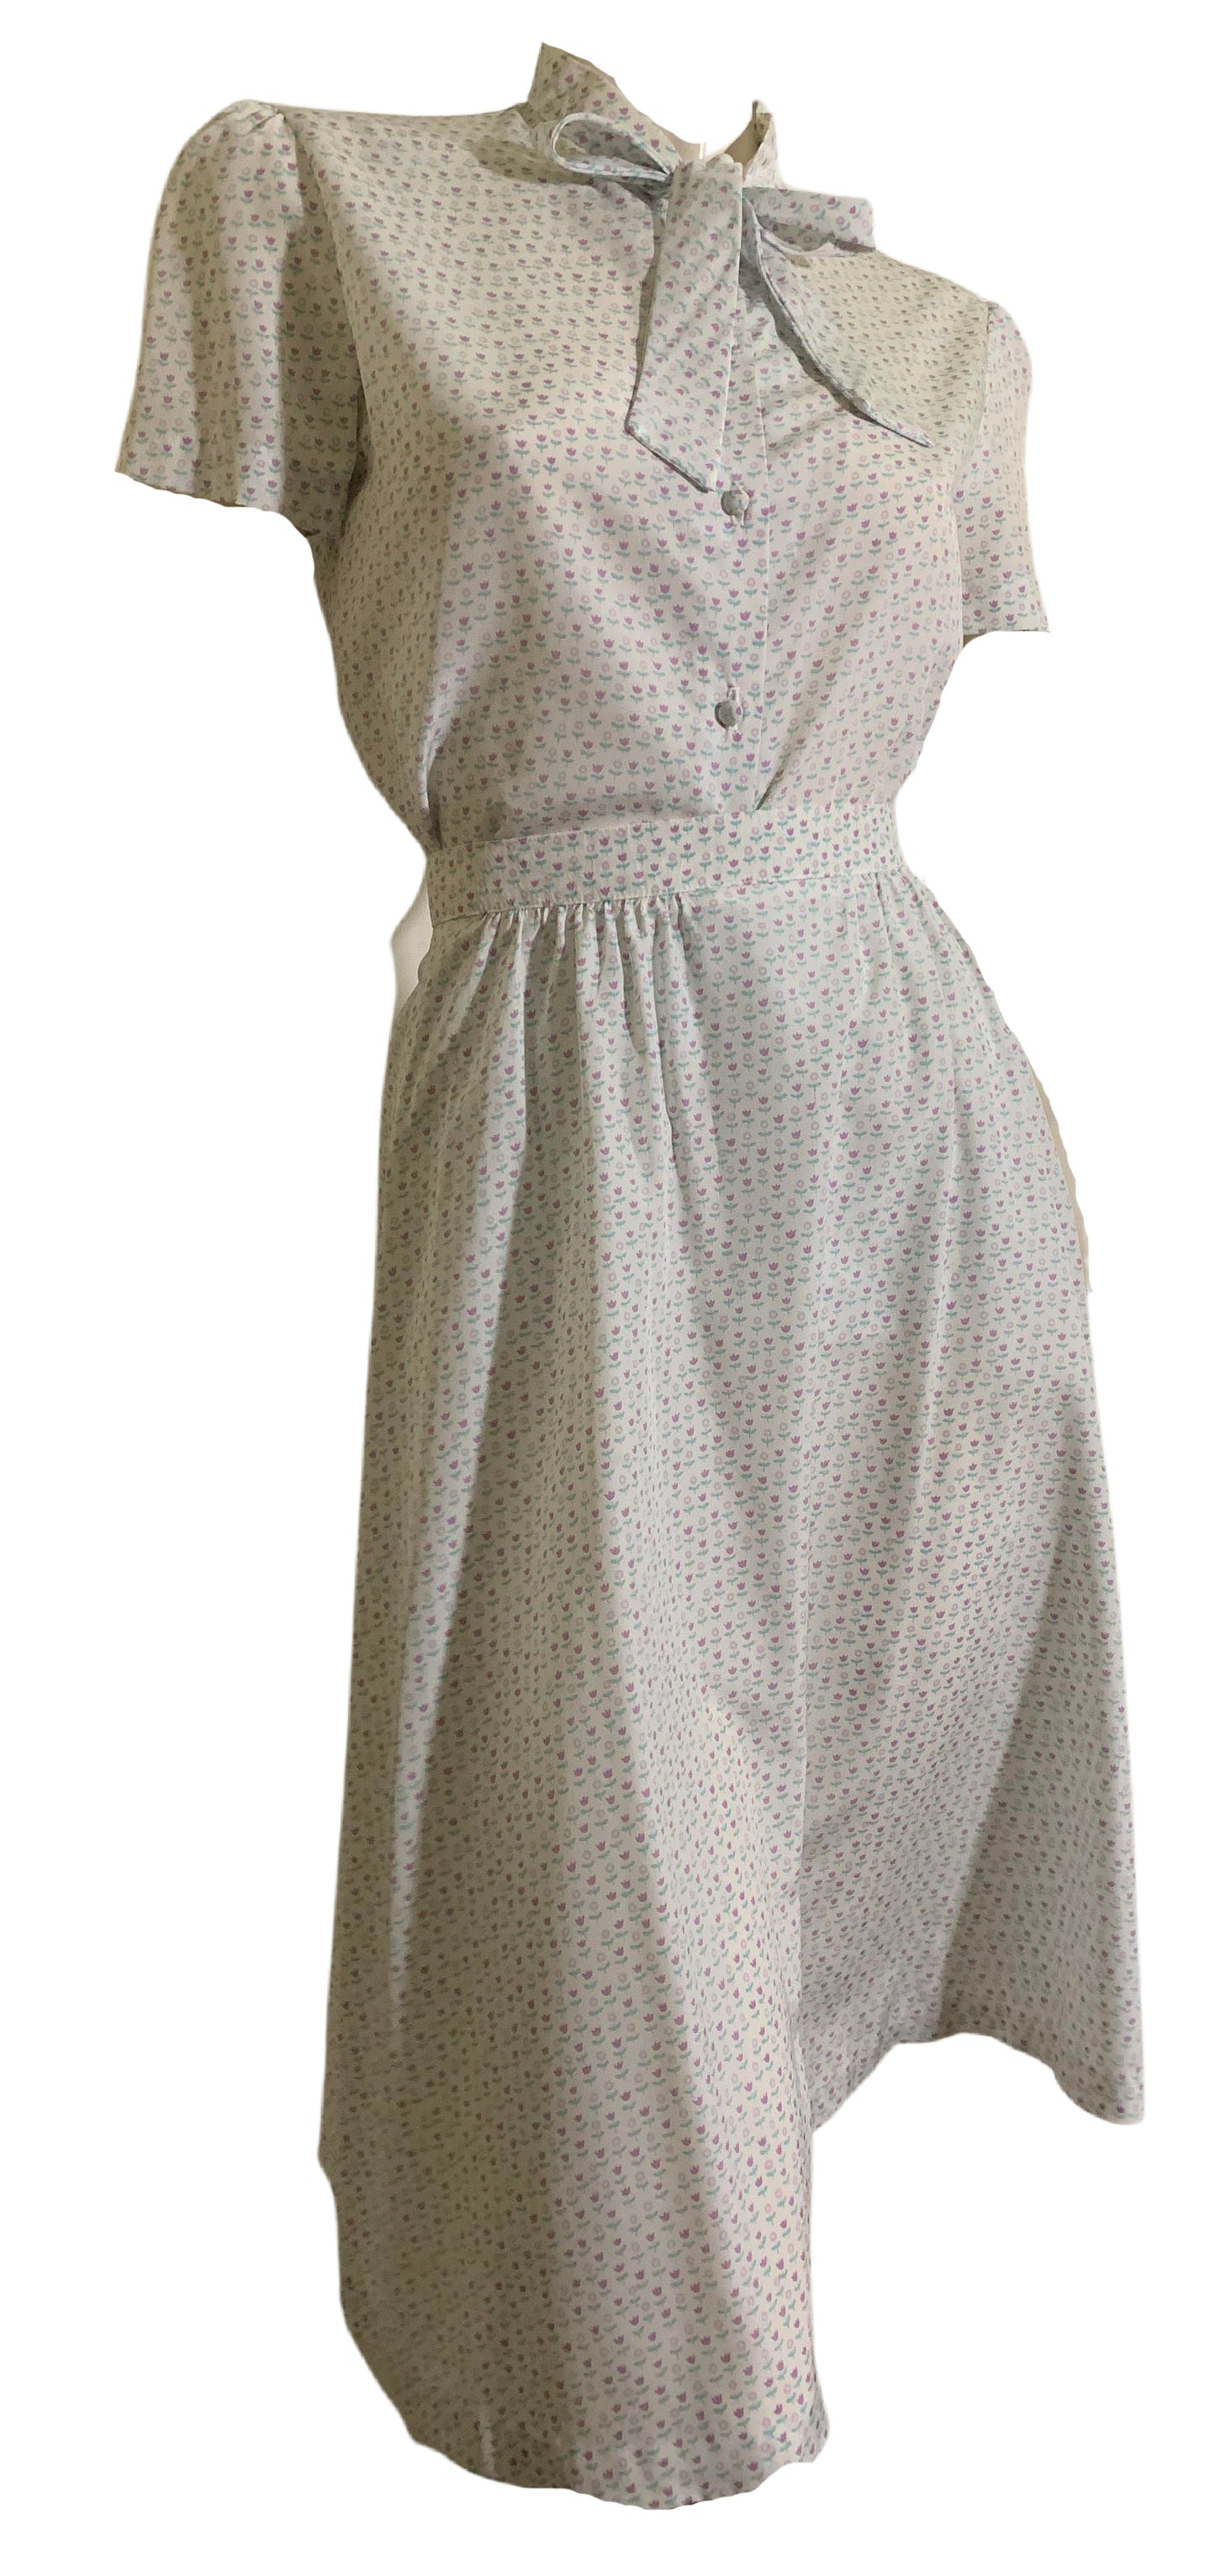 Pastel Floral Print Dress Set 2 Blouses one Skirt circa 1970s